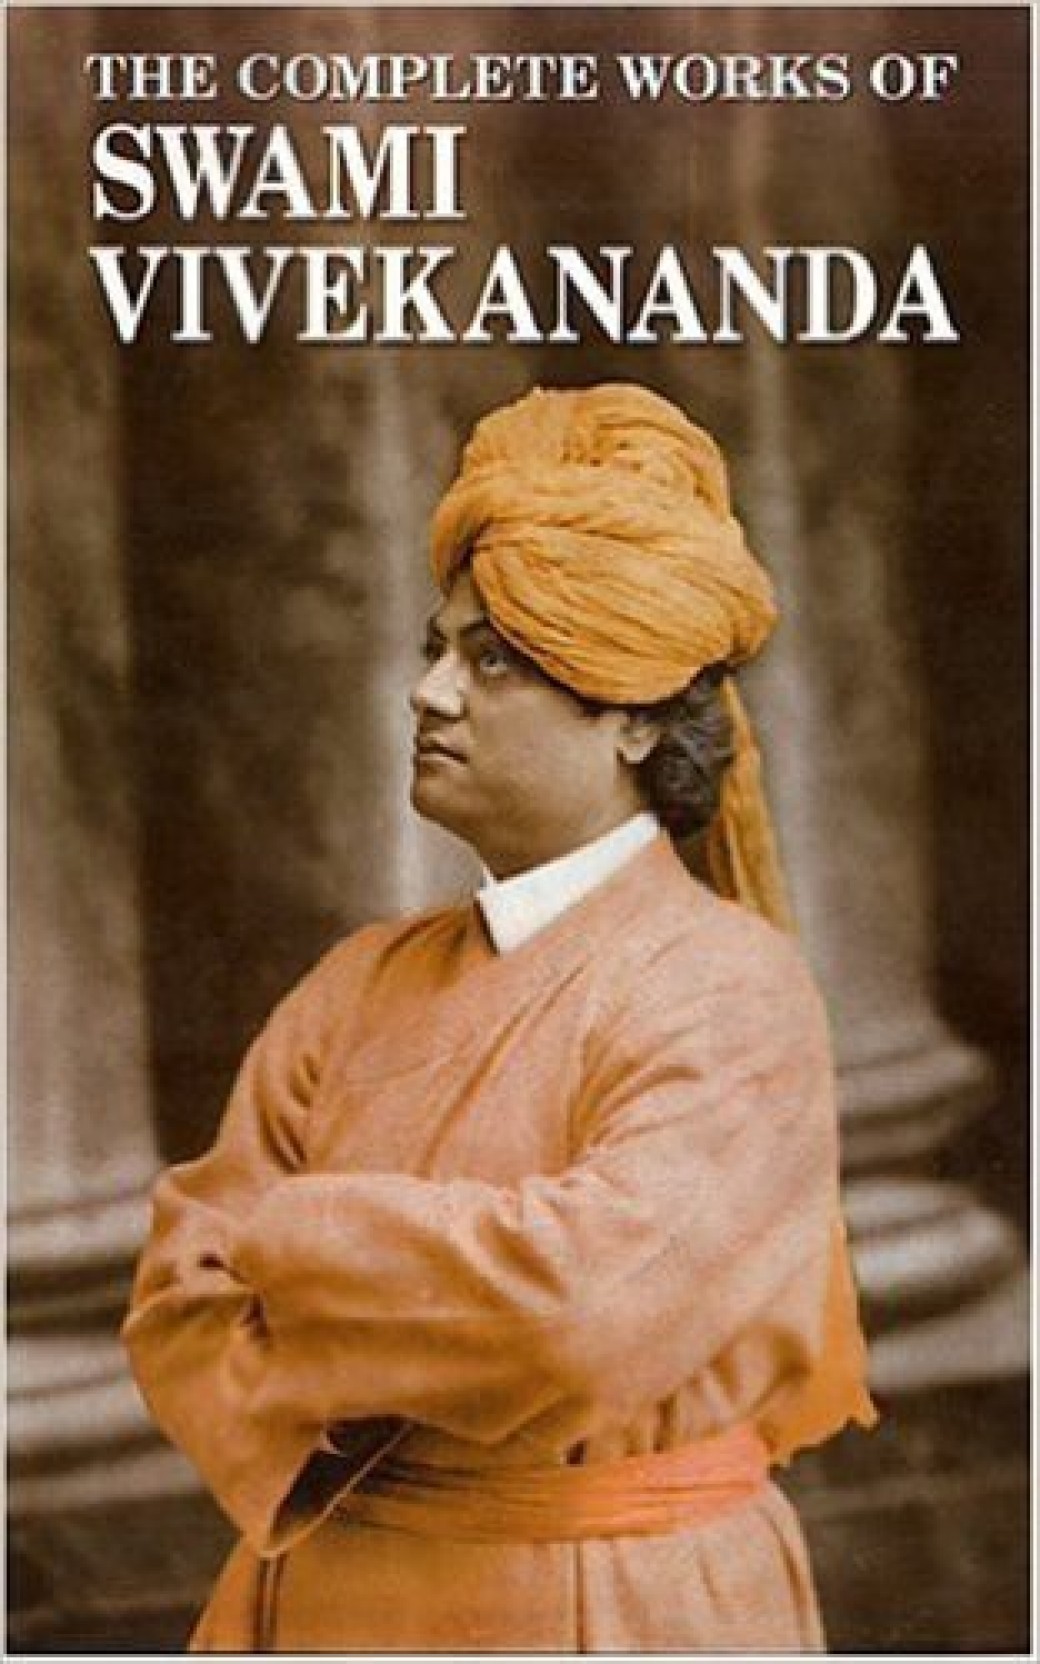 book review on swami vivekananda